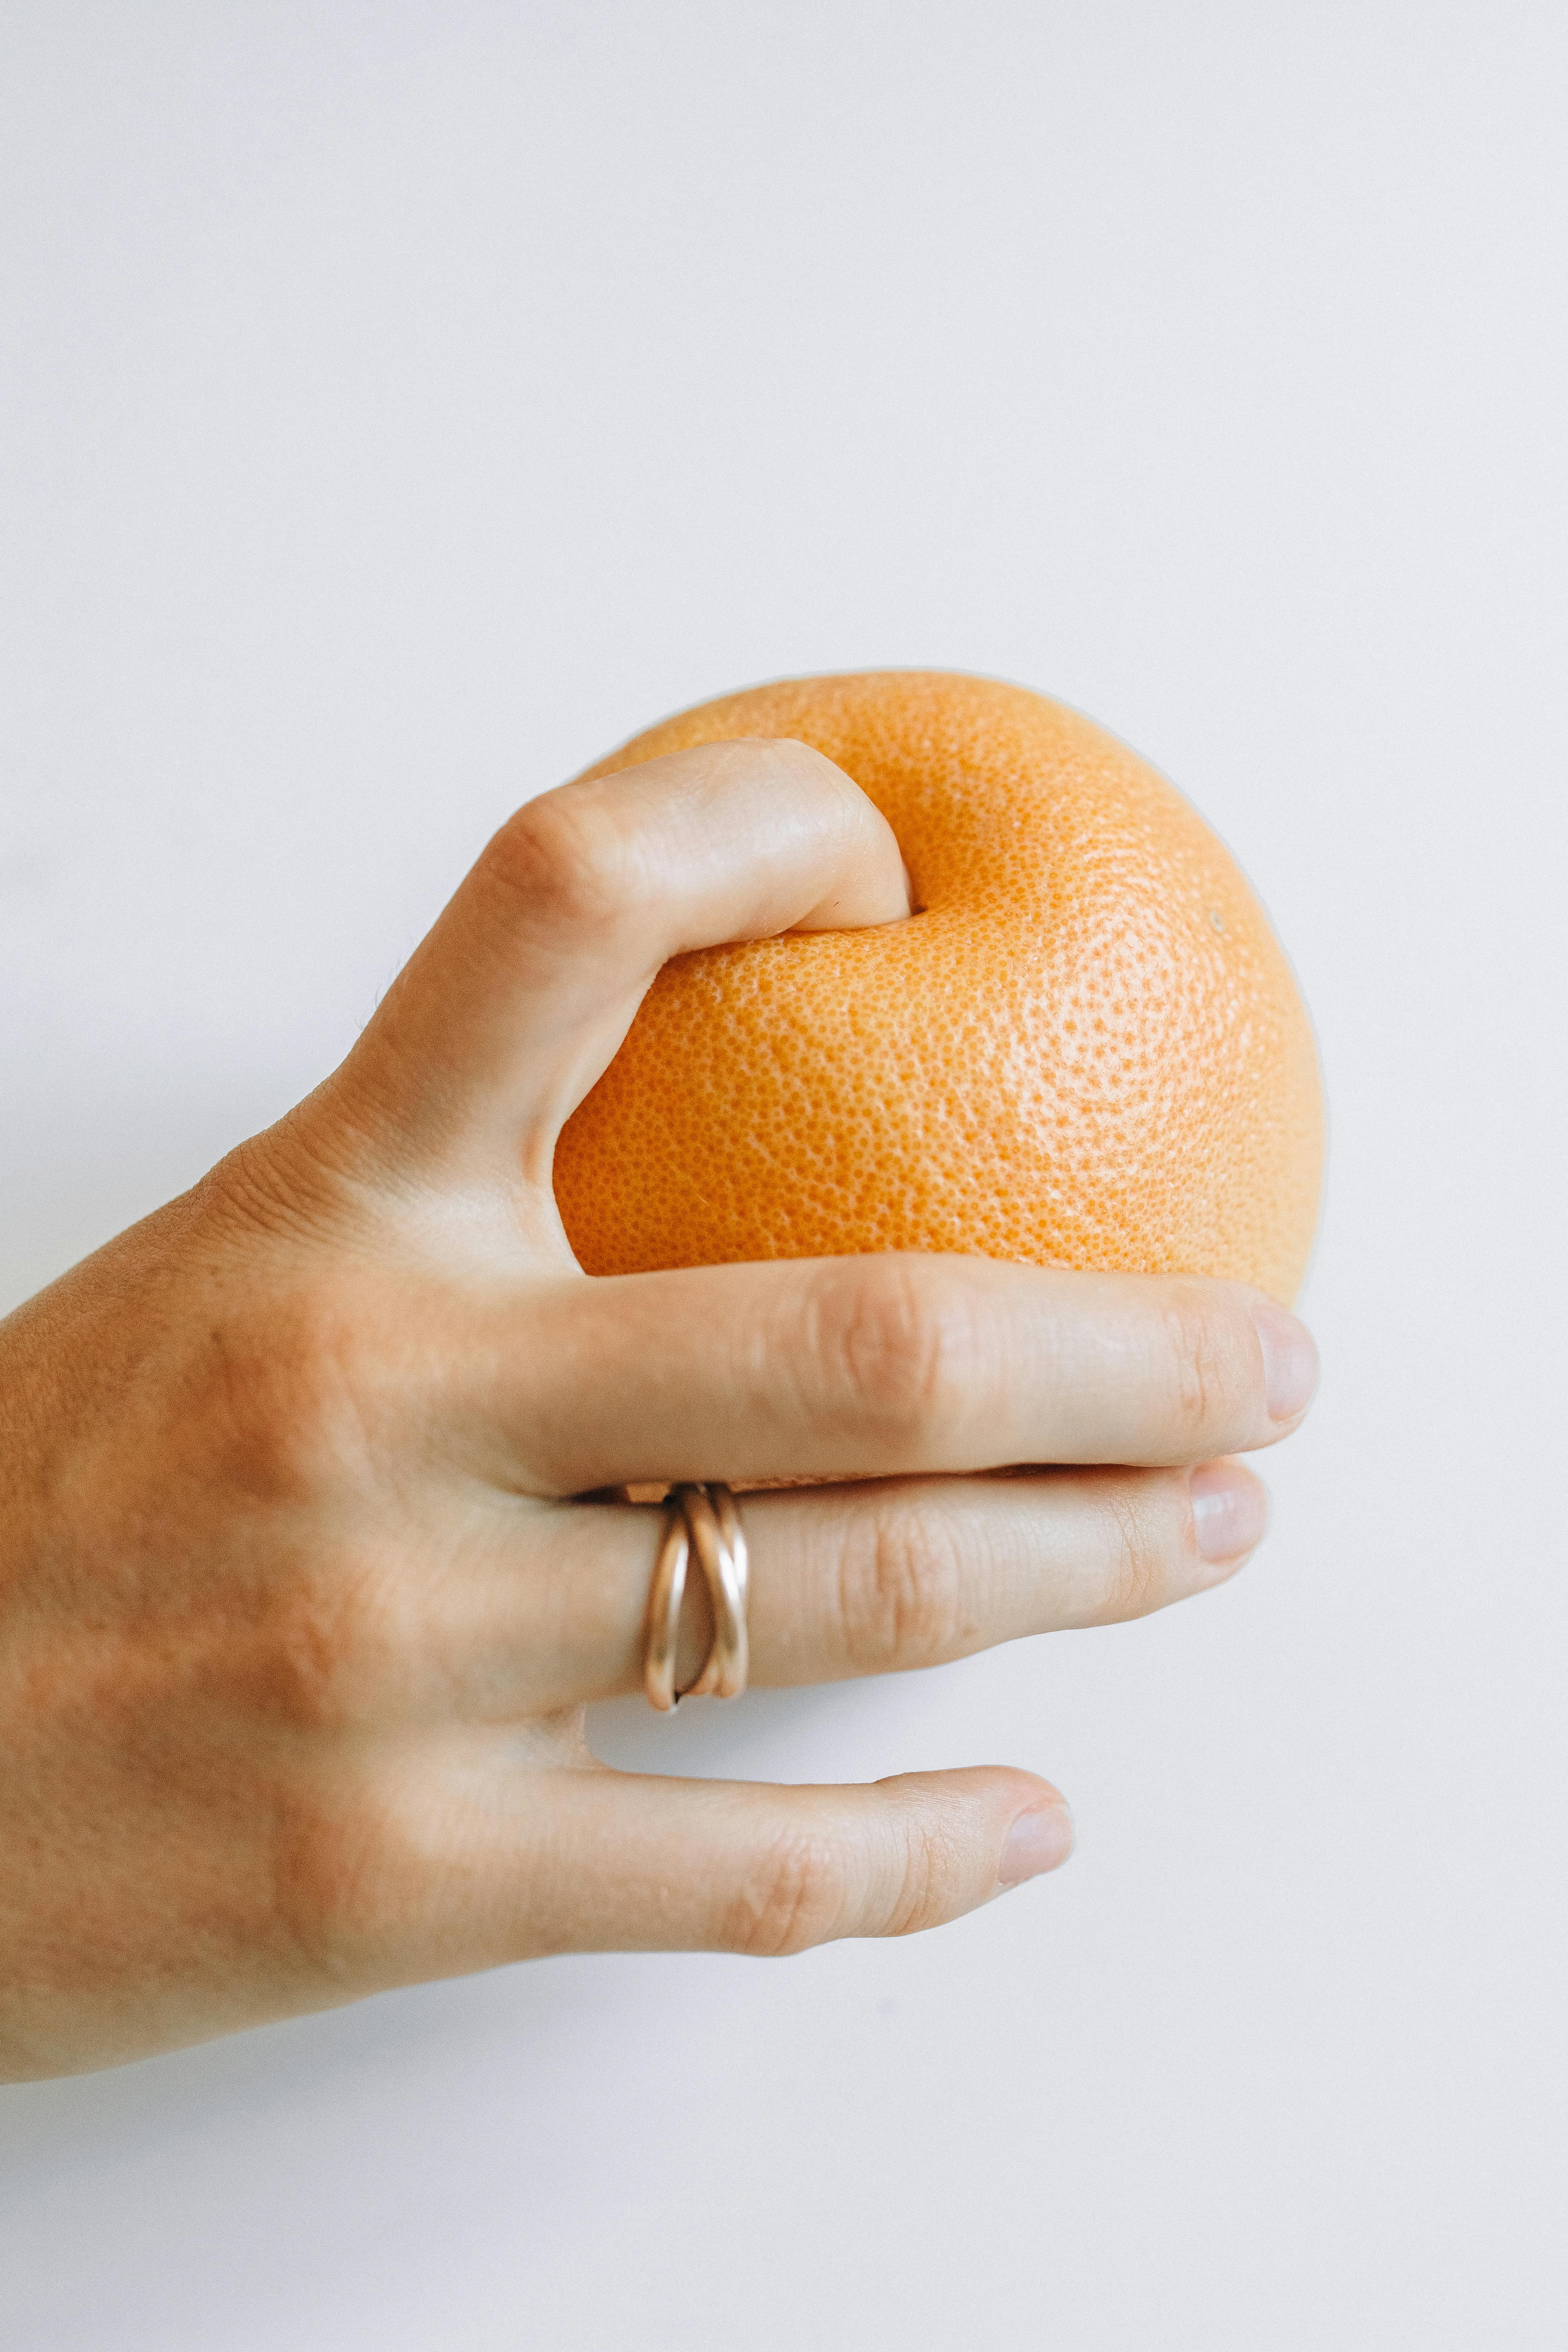 person holding orange fruit